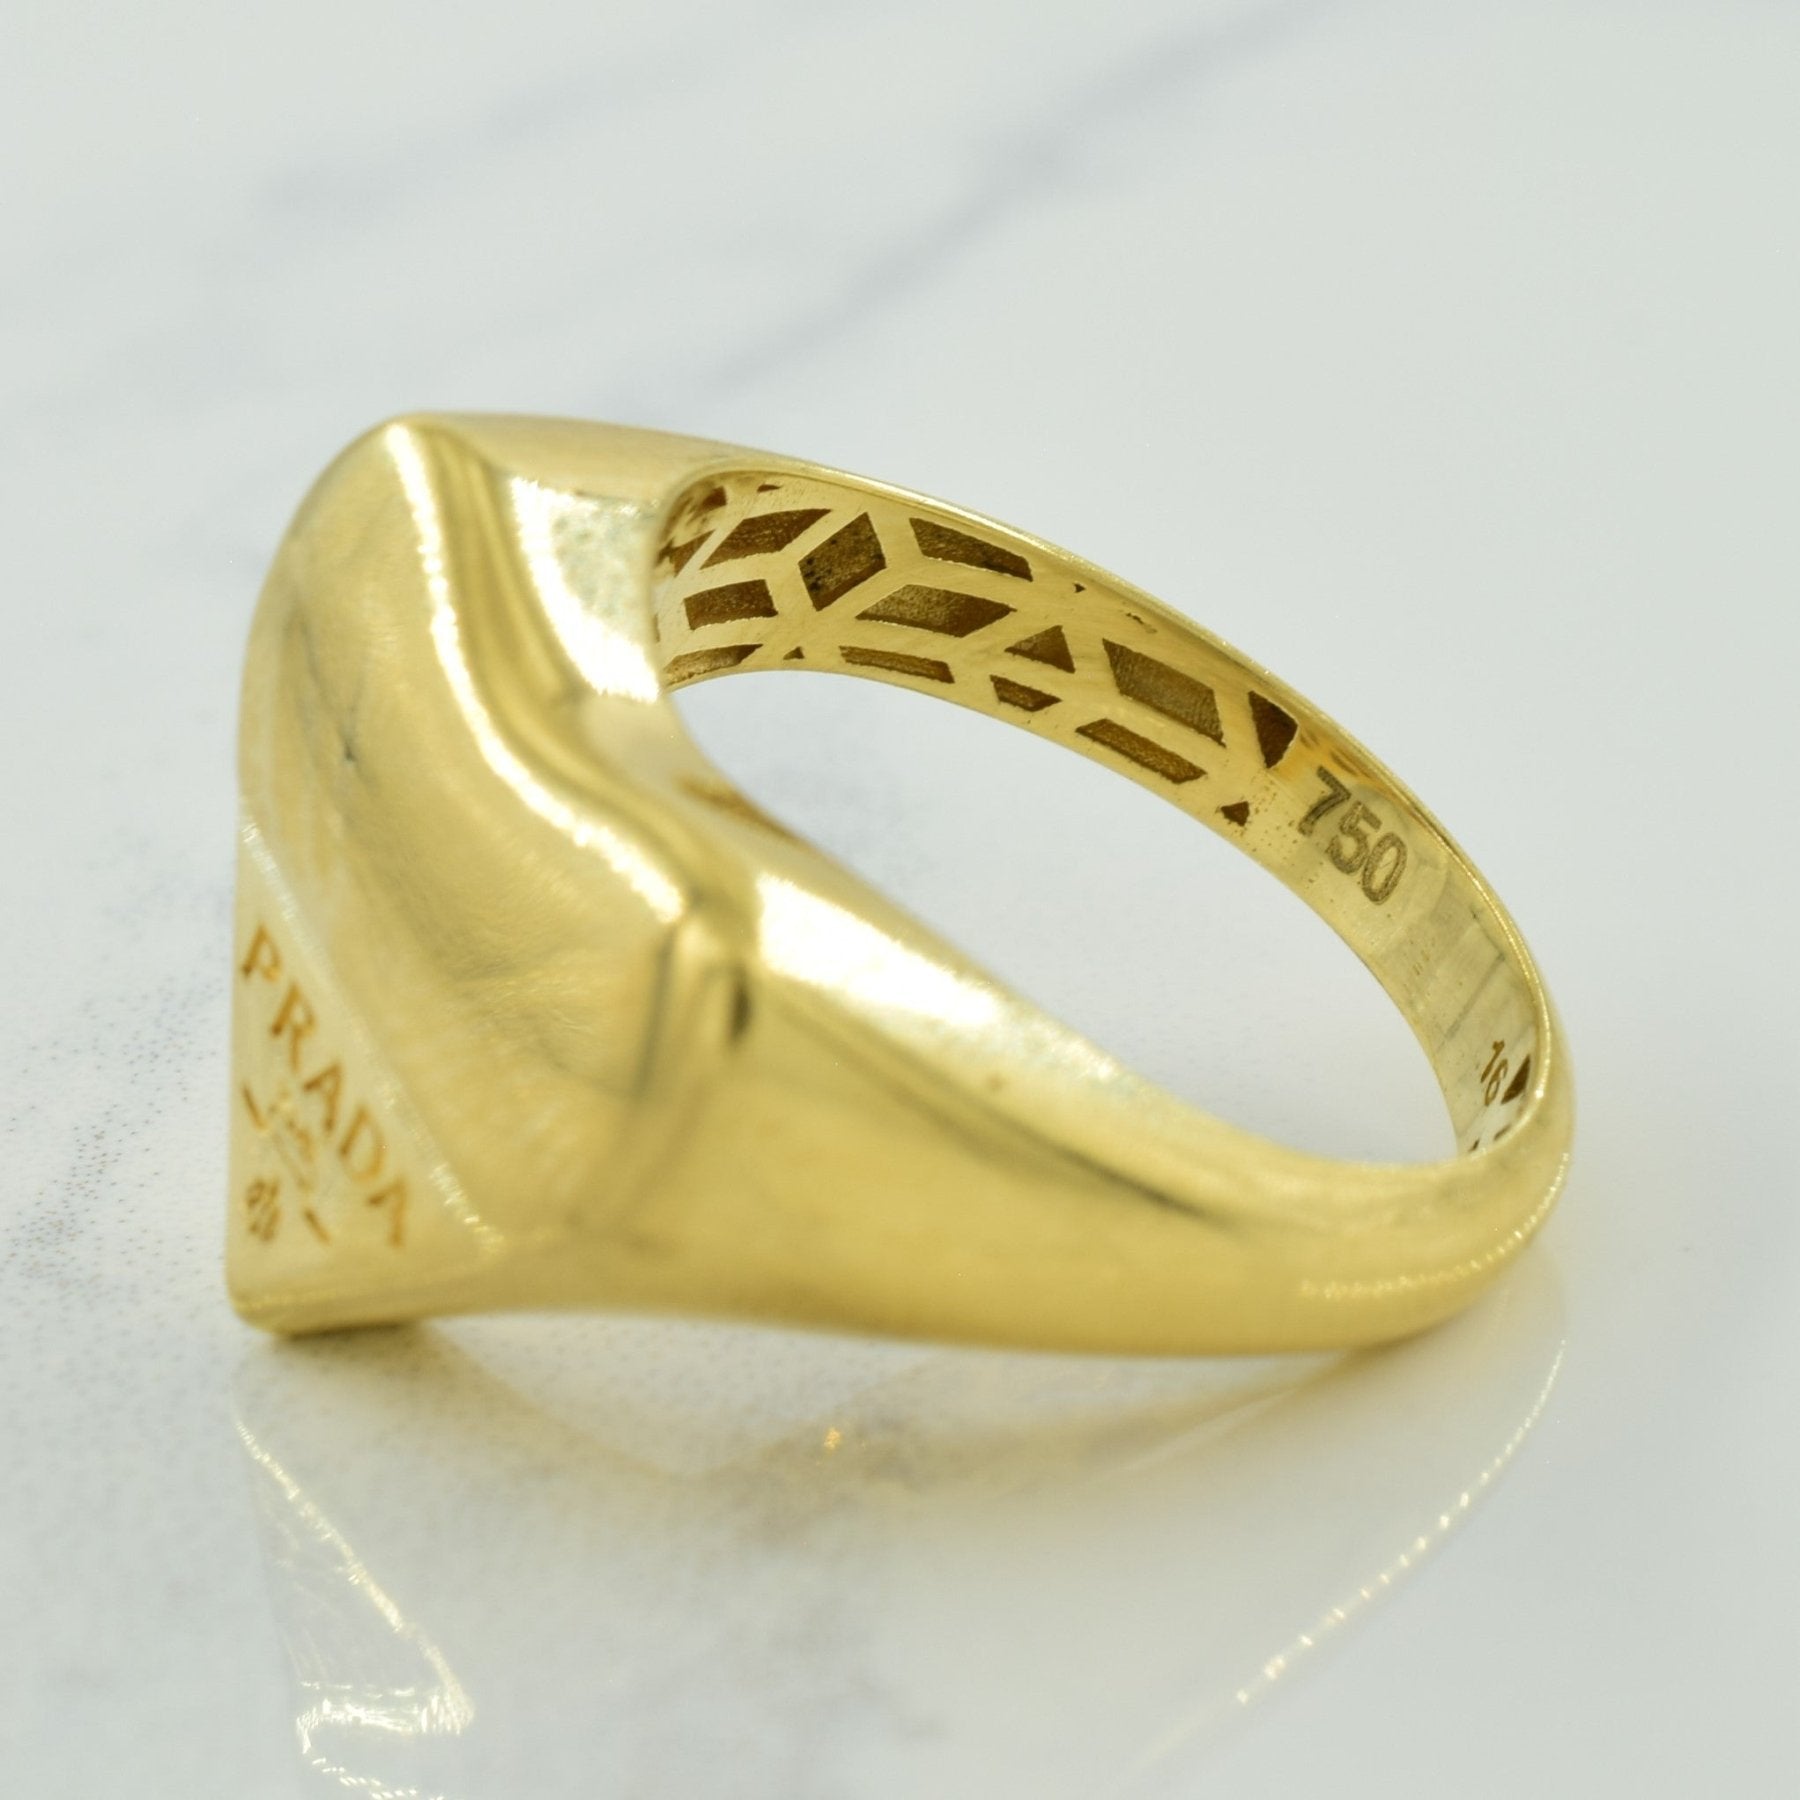 'Prada' 18k Yellow Gold Heart Ring | SZ 7.5 | price check - 100 Ways